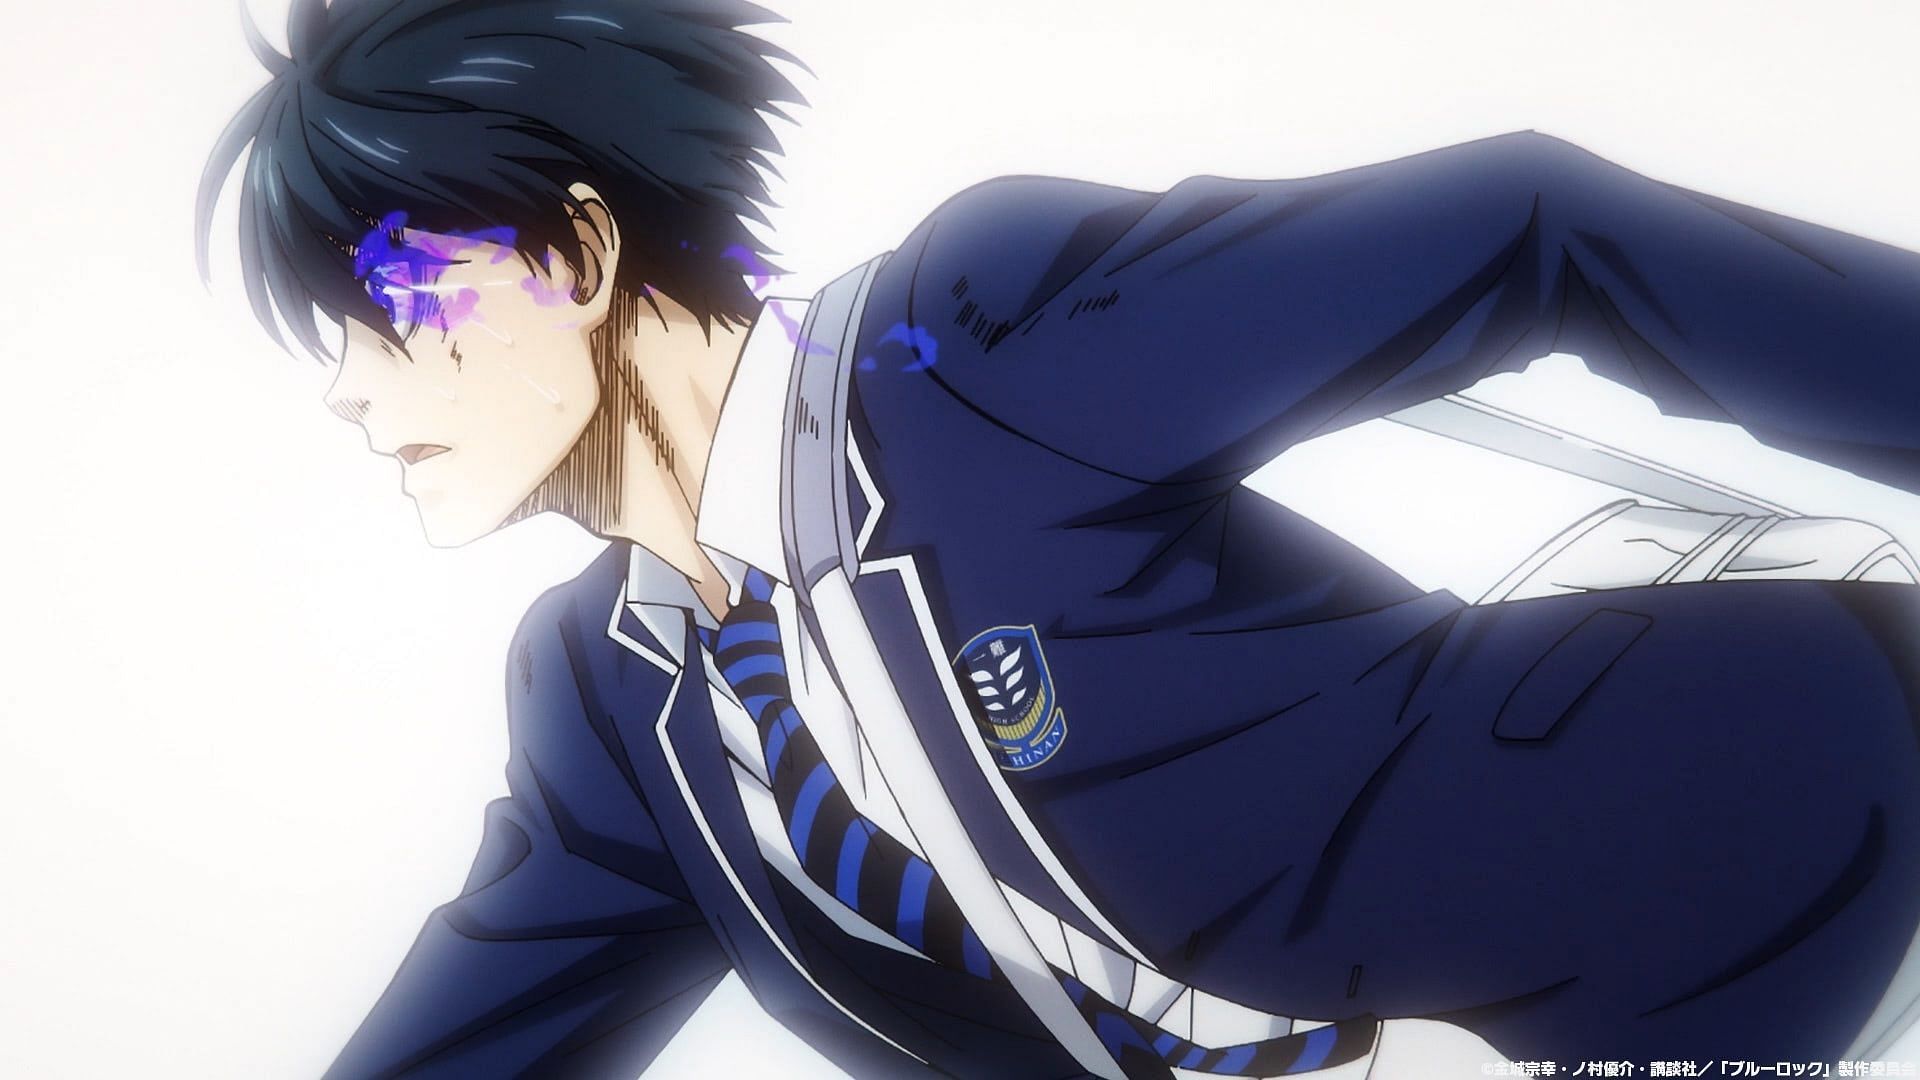 Isagi as seen in the anime Blue Lock (Image via Muneyuki Kaneshiro, Kodansha)